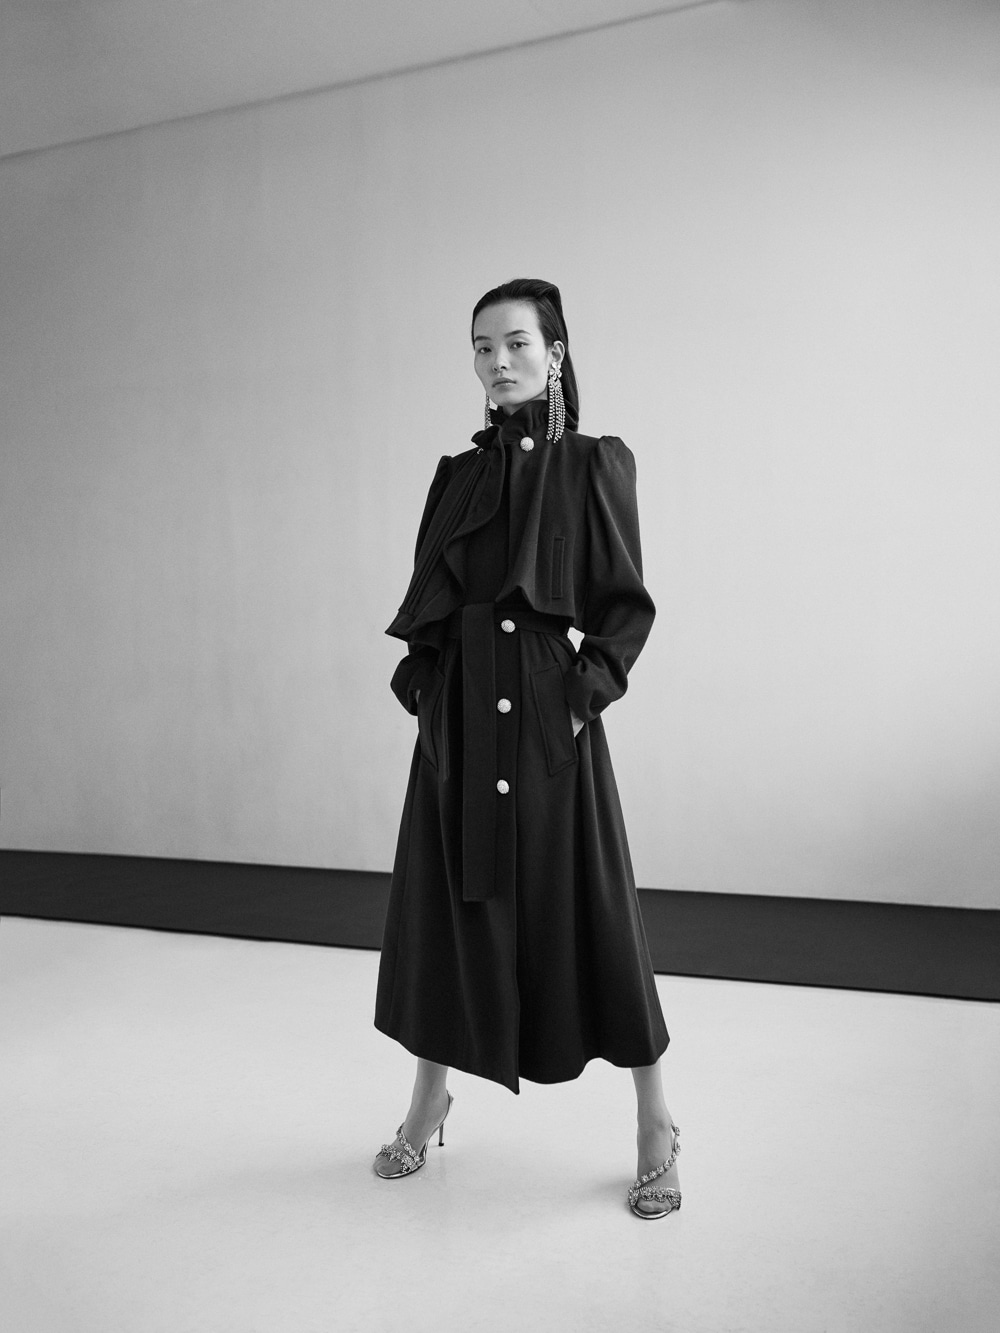 Vogue-Taiwan-September-2018-Ling-Liu-by-Zoltan-Tombor-4.jpg